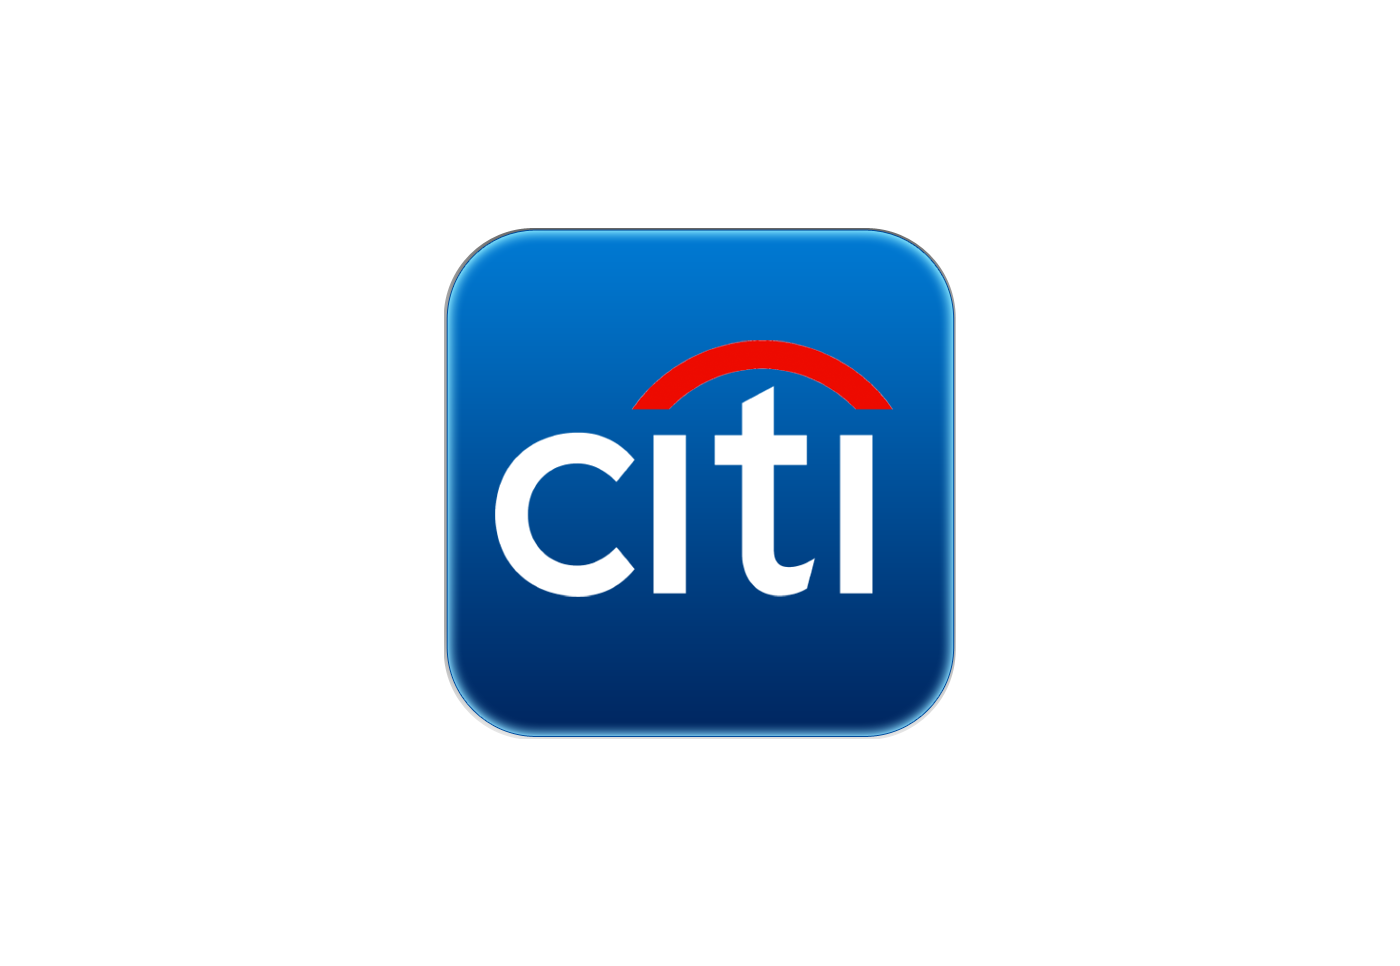 C ai сайт. Citigroup логотип. Citi банк. Ситибанк значок. Банк City лого.